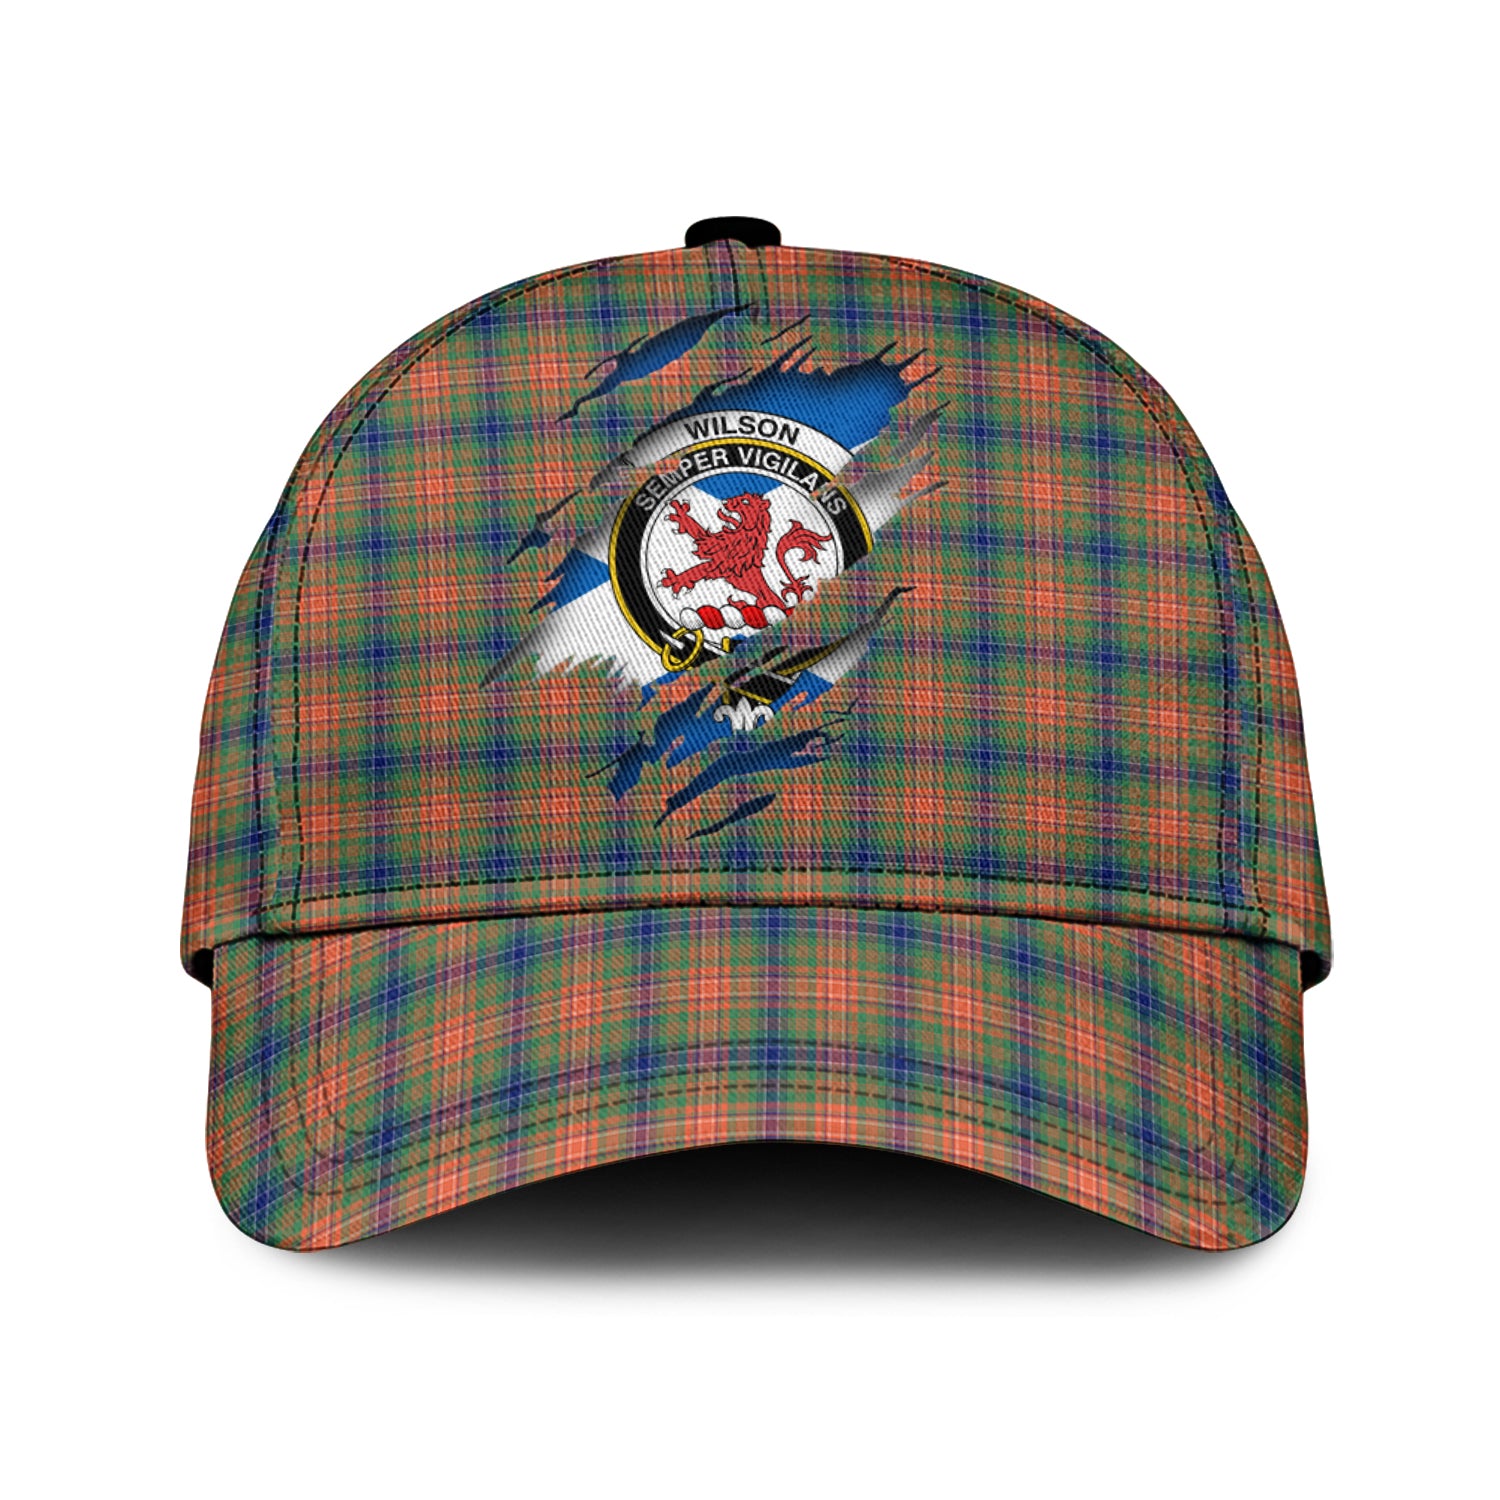 wilson-ancient-tartan-plaid-cap-family-crest-in-me-style-tartan-baseball-cap